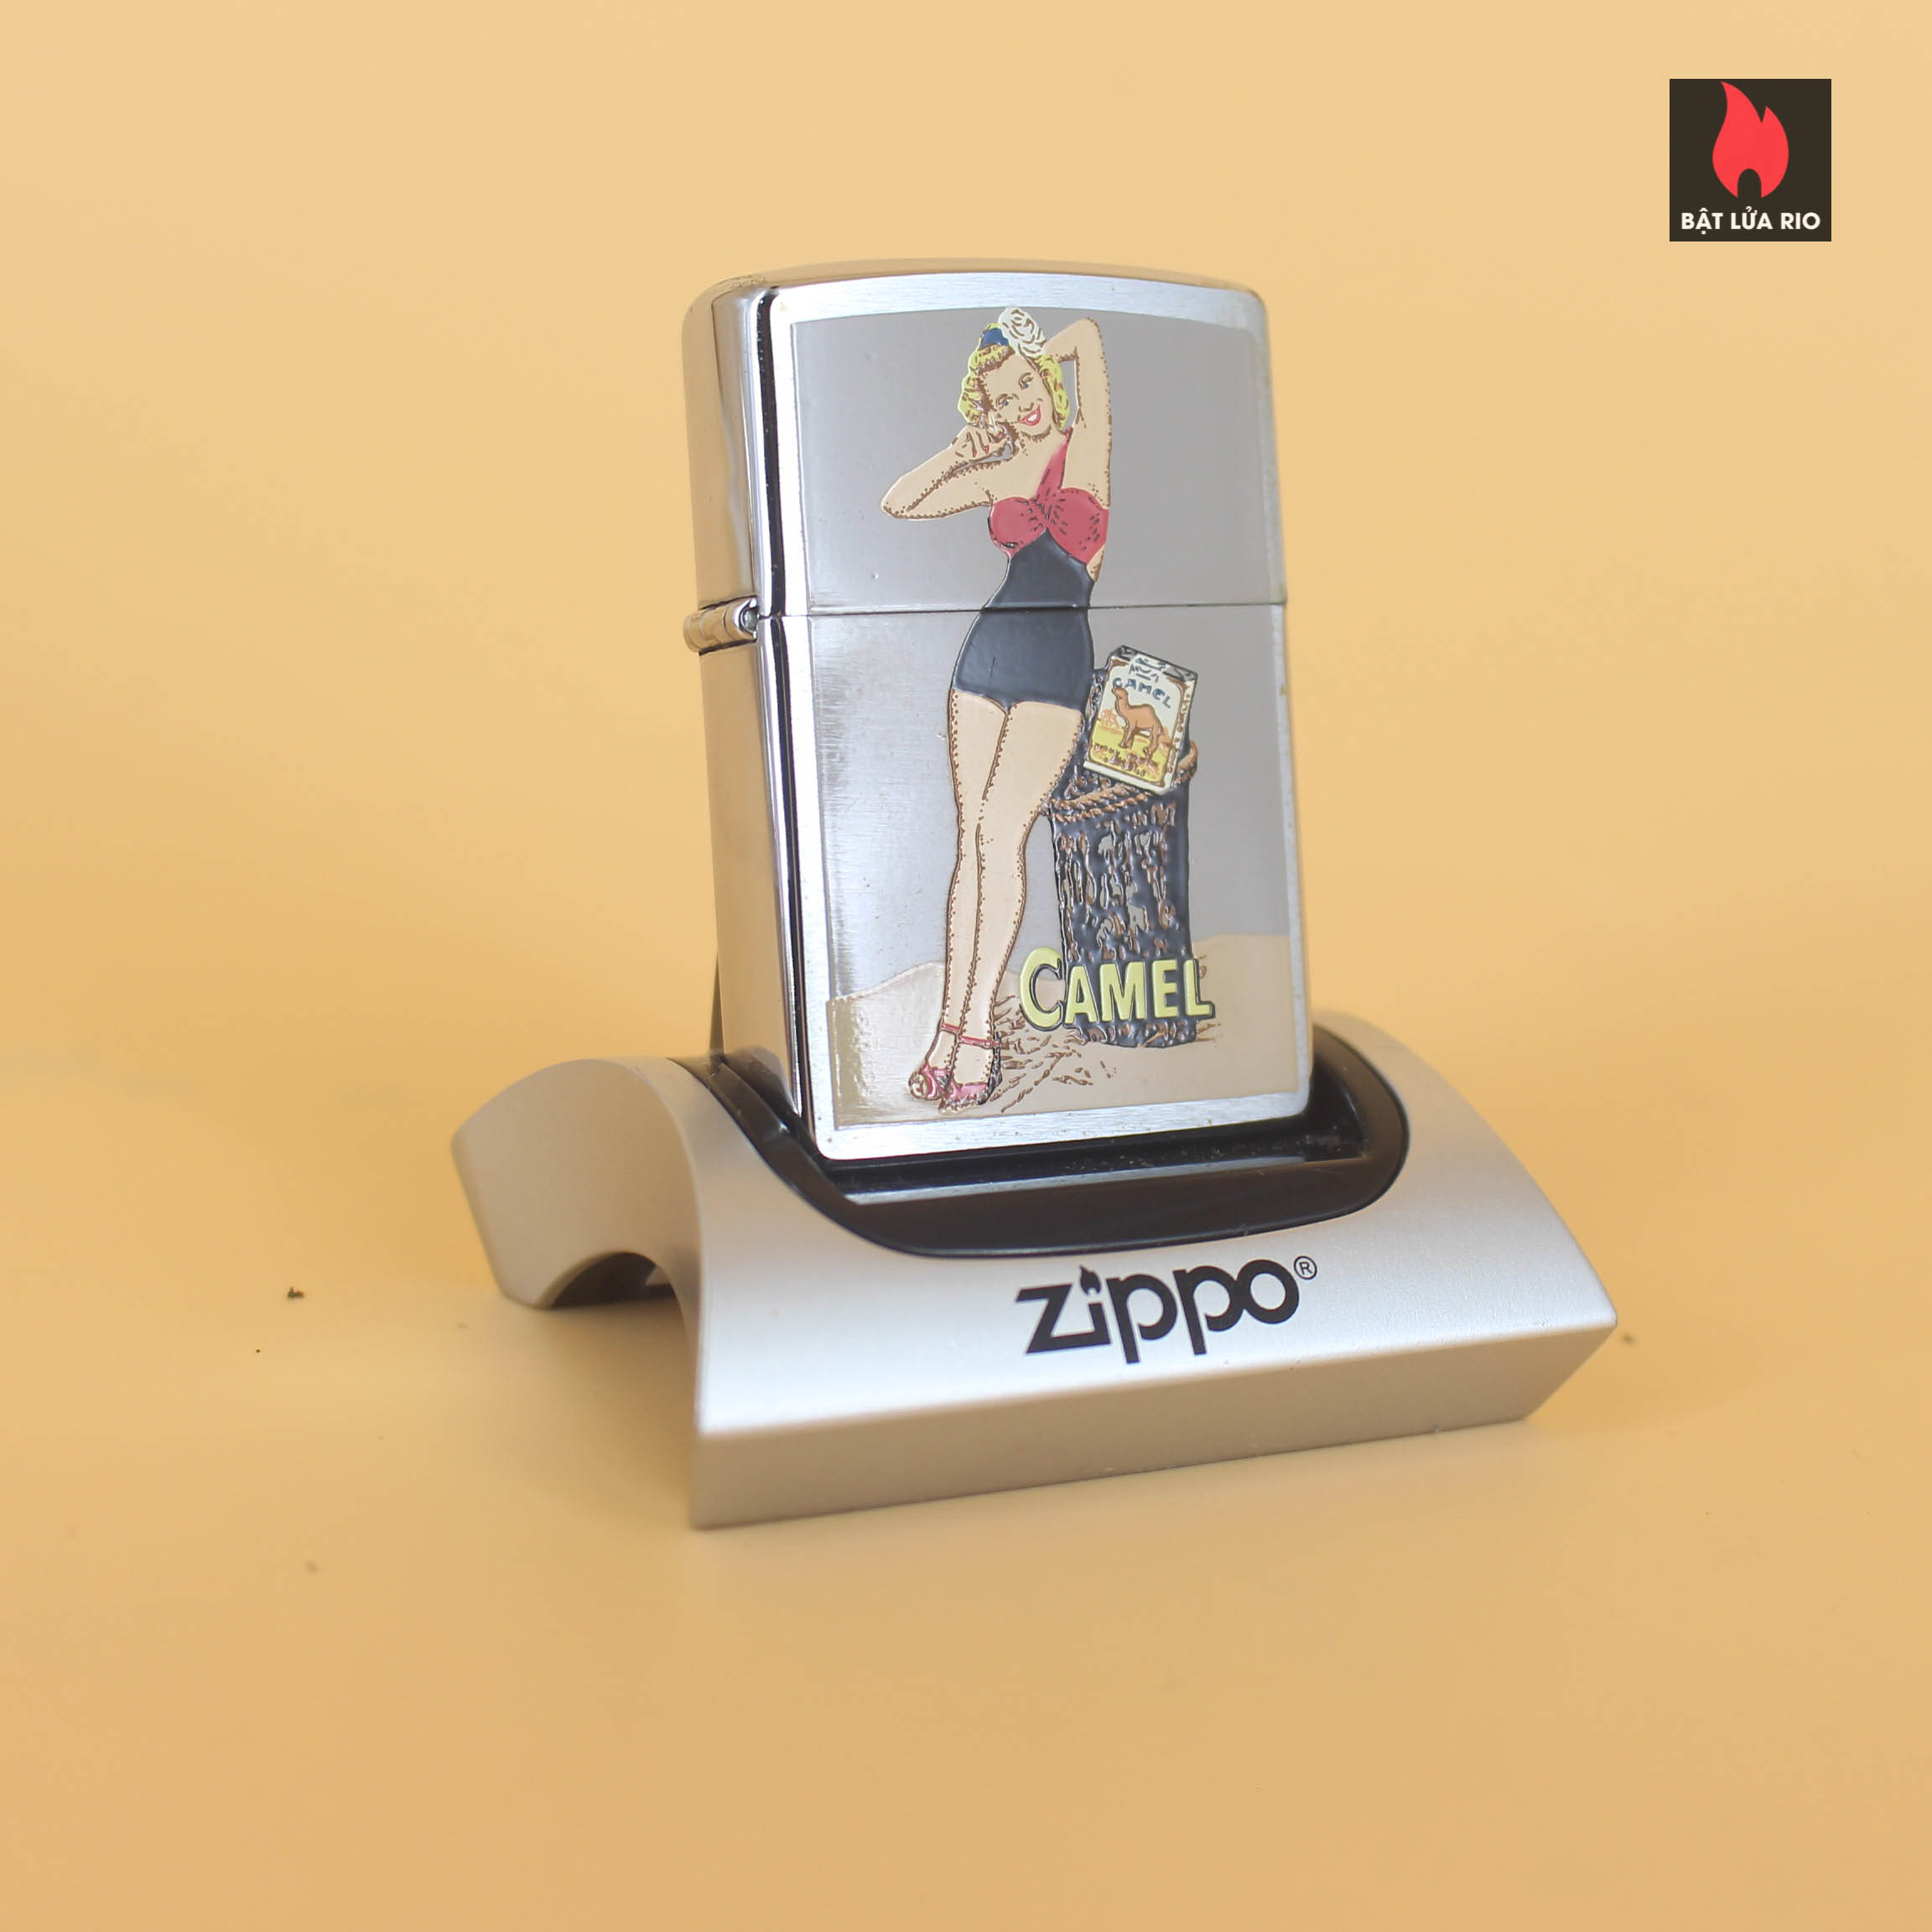 Zippo La Mã 1997 – Camel Pin-Up Girl